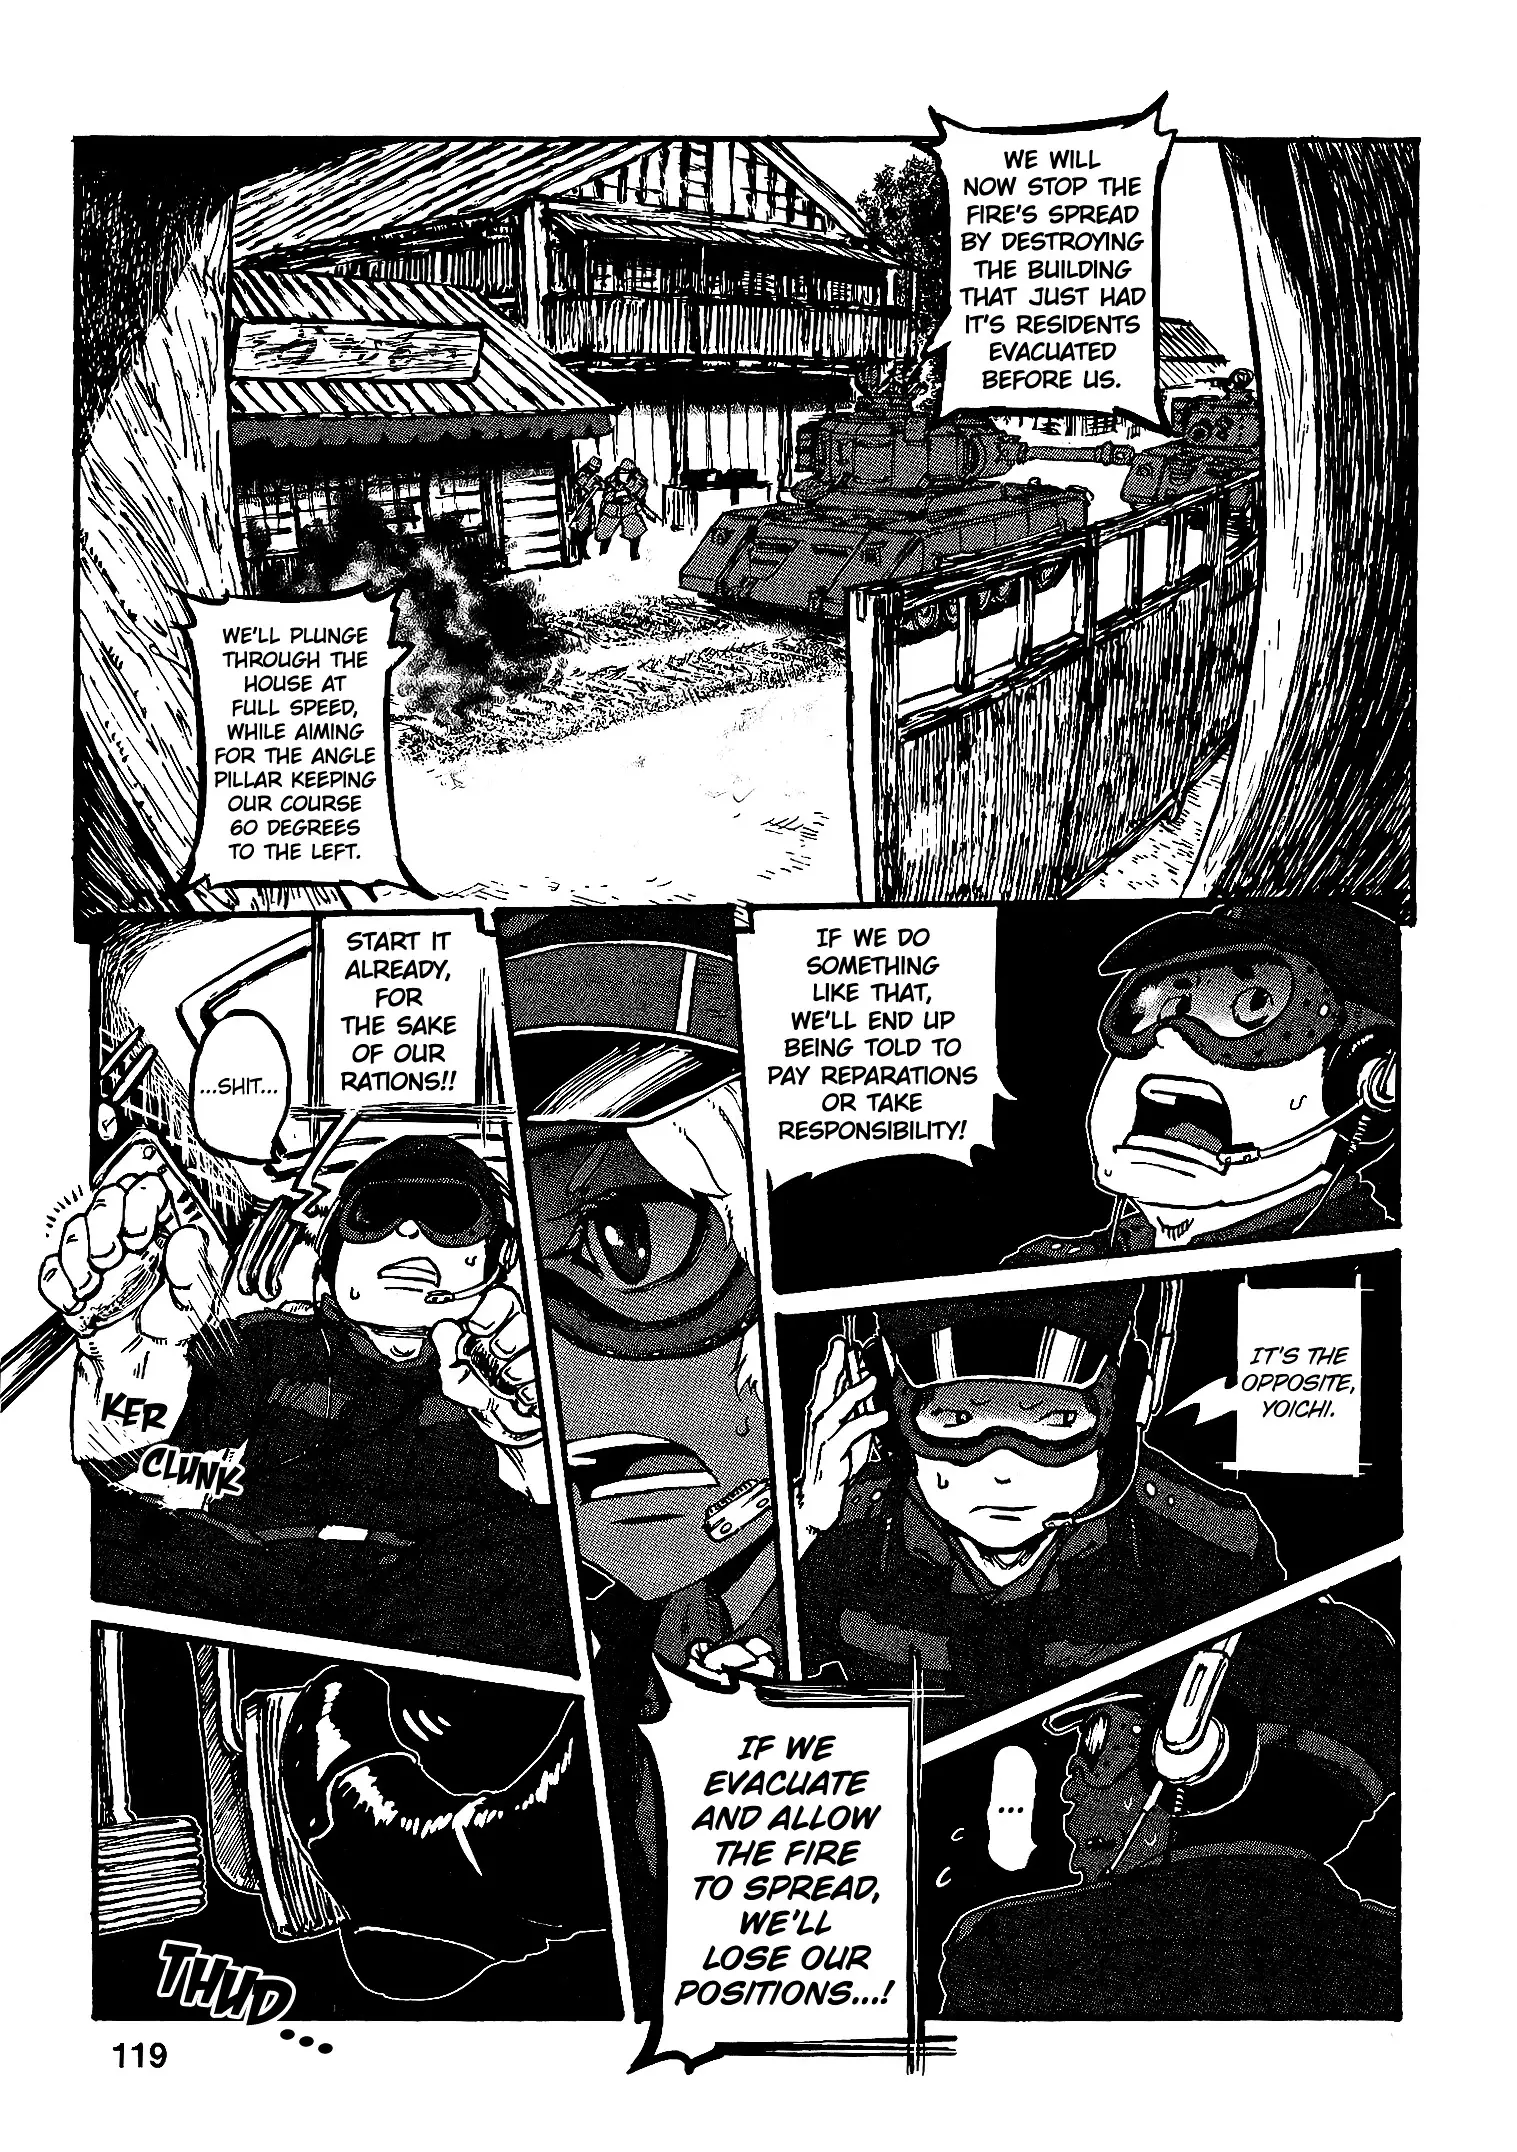 Groundless - Sekigan No Sogekihei - 17 page 7-71006ef9